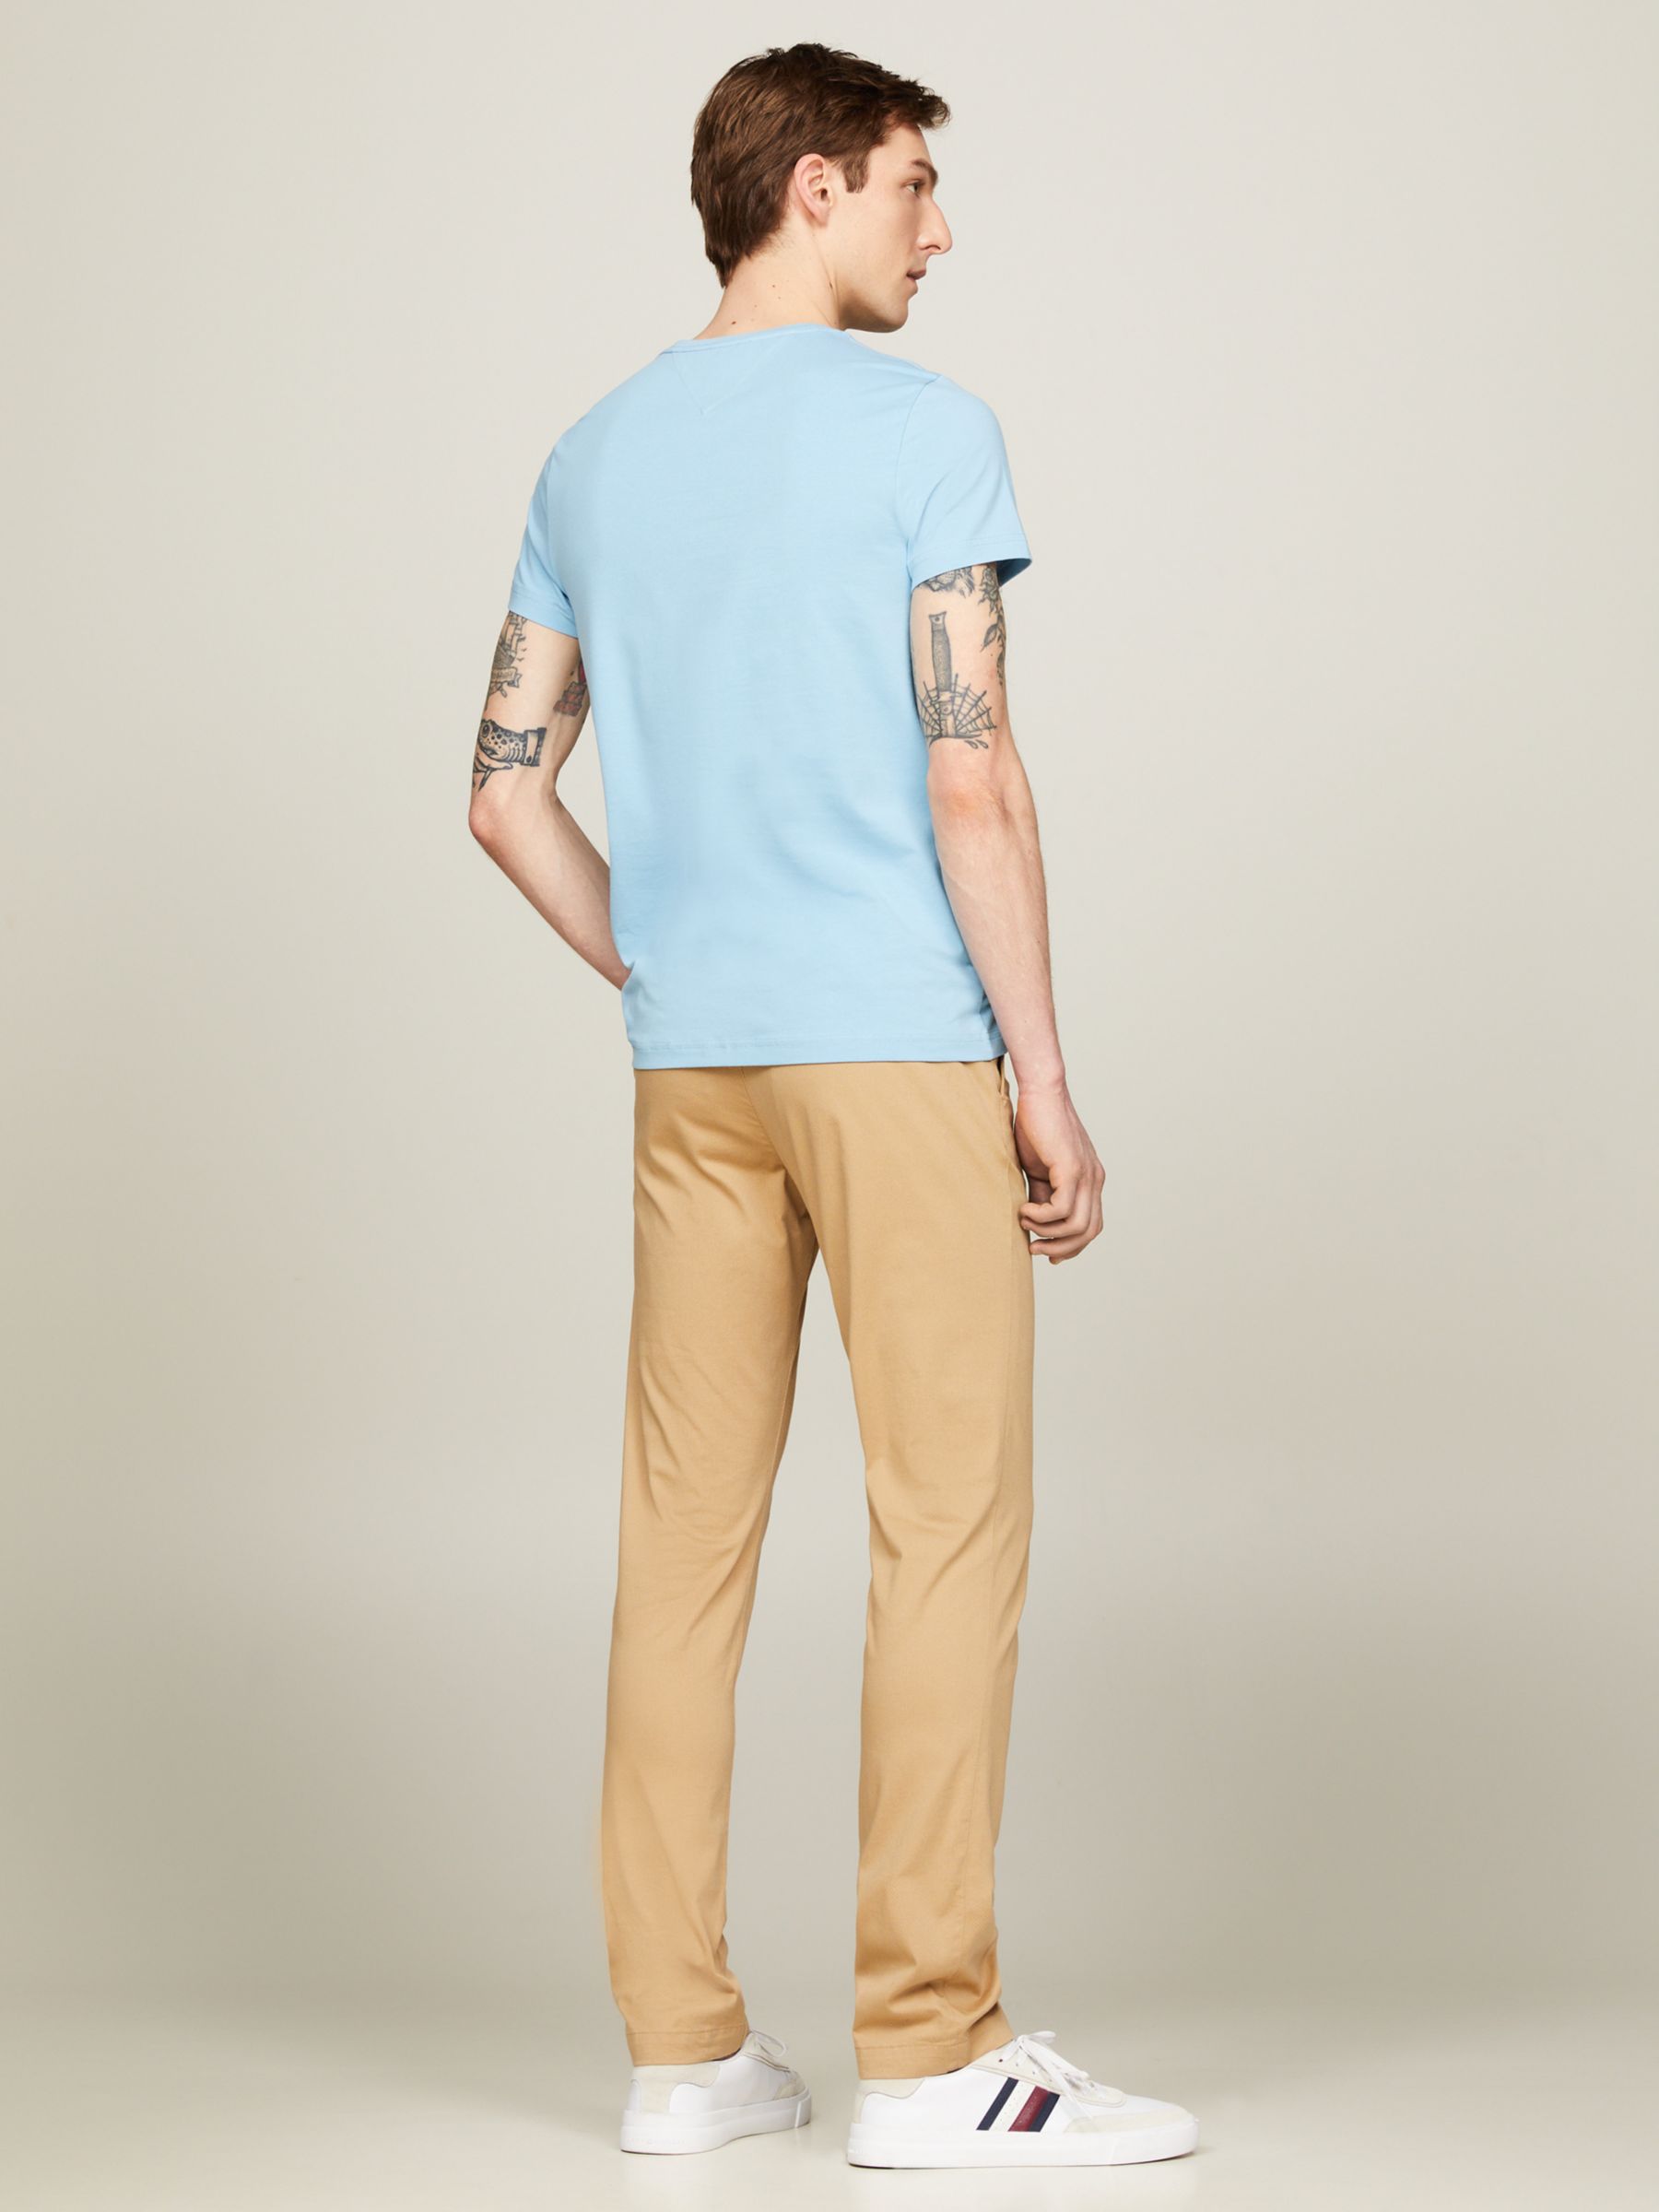 Tommy Hilfiger Stretch Slim Fit T-Shirt, Sleepy Blue, XS